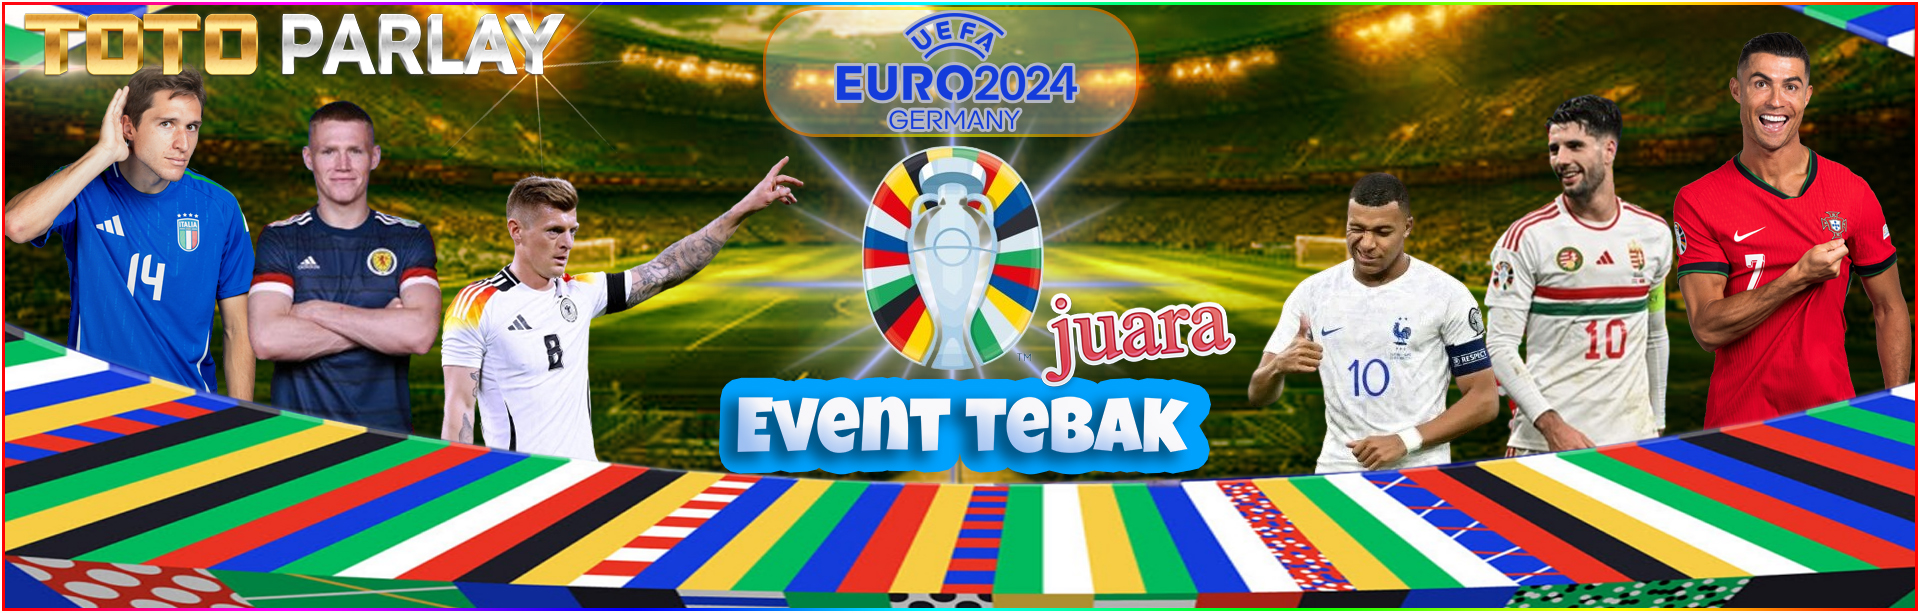 EVENT EURO 2024